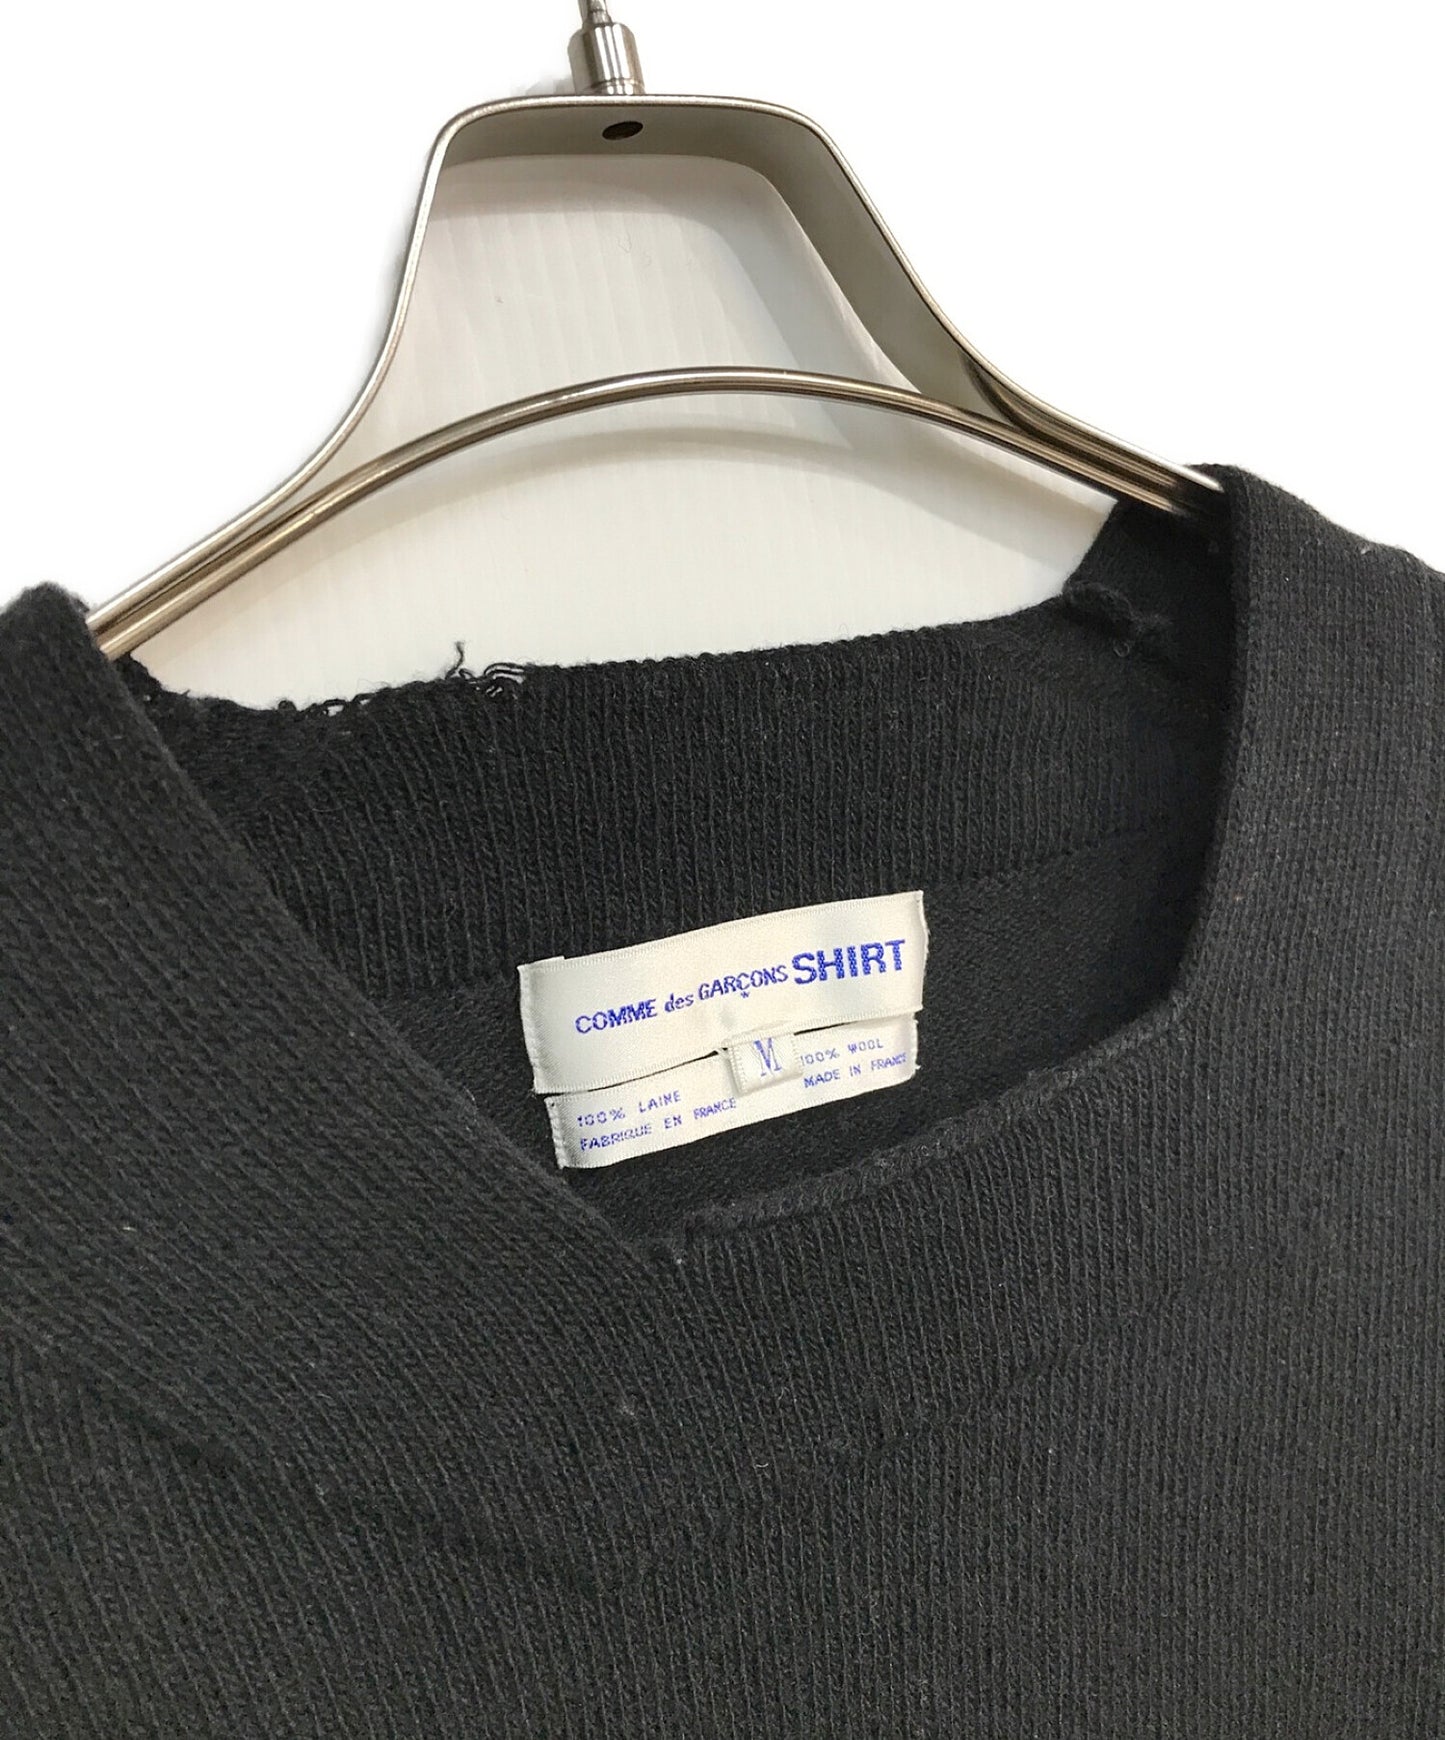 Comme des Garcons襯衫90的舊標籤，用法國廣場項圈編織製成